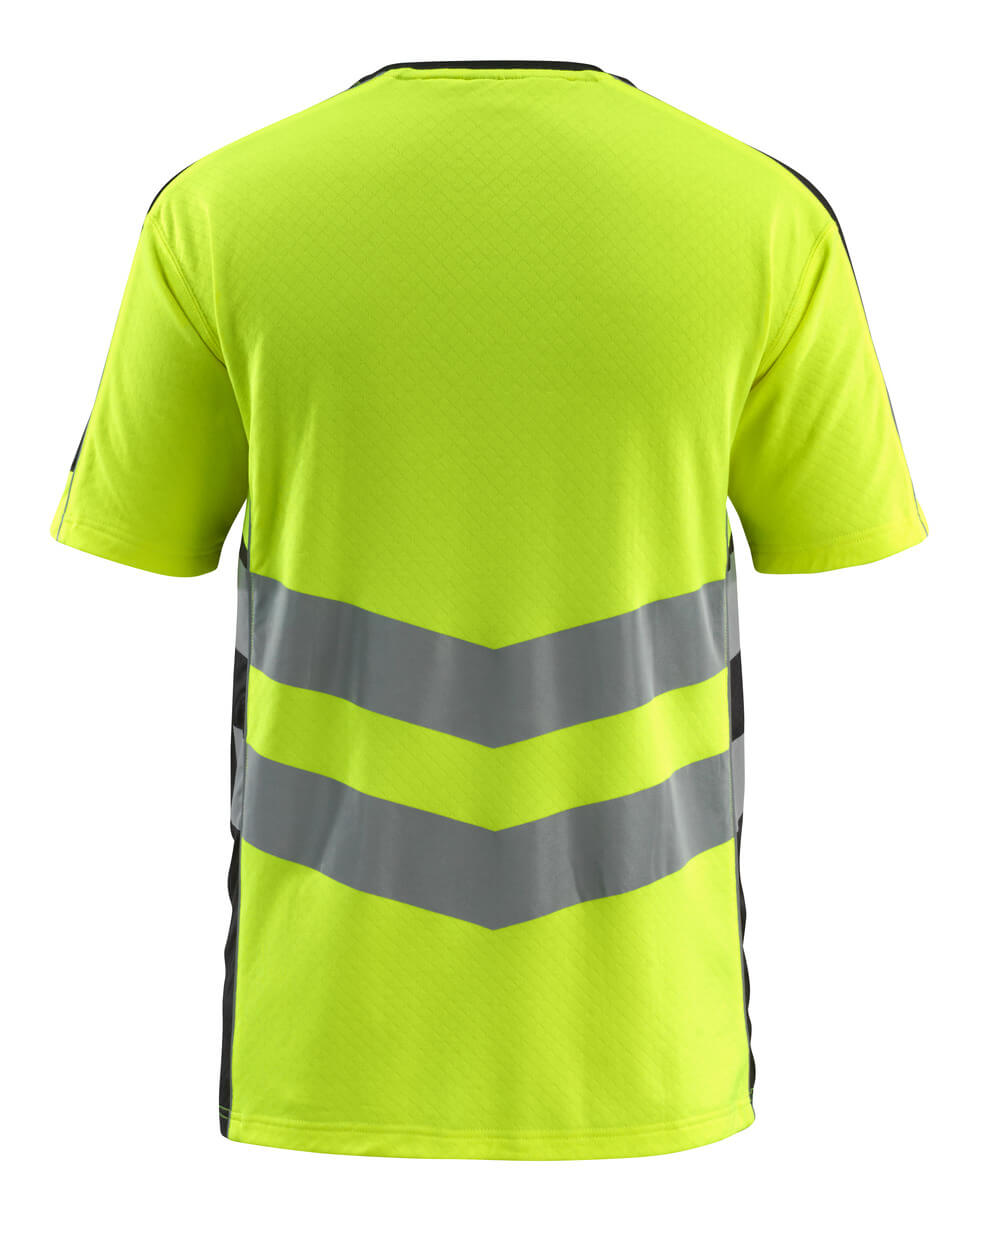 Mascot SAFE SUPREME  Sandwell T-shirt 50127 hi-vis yellow/black